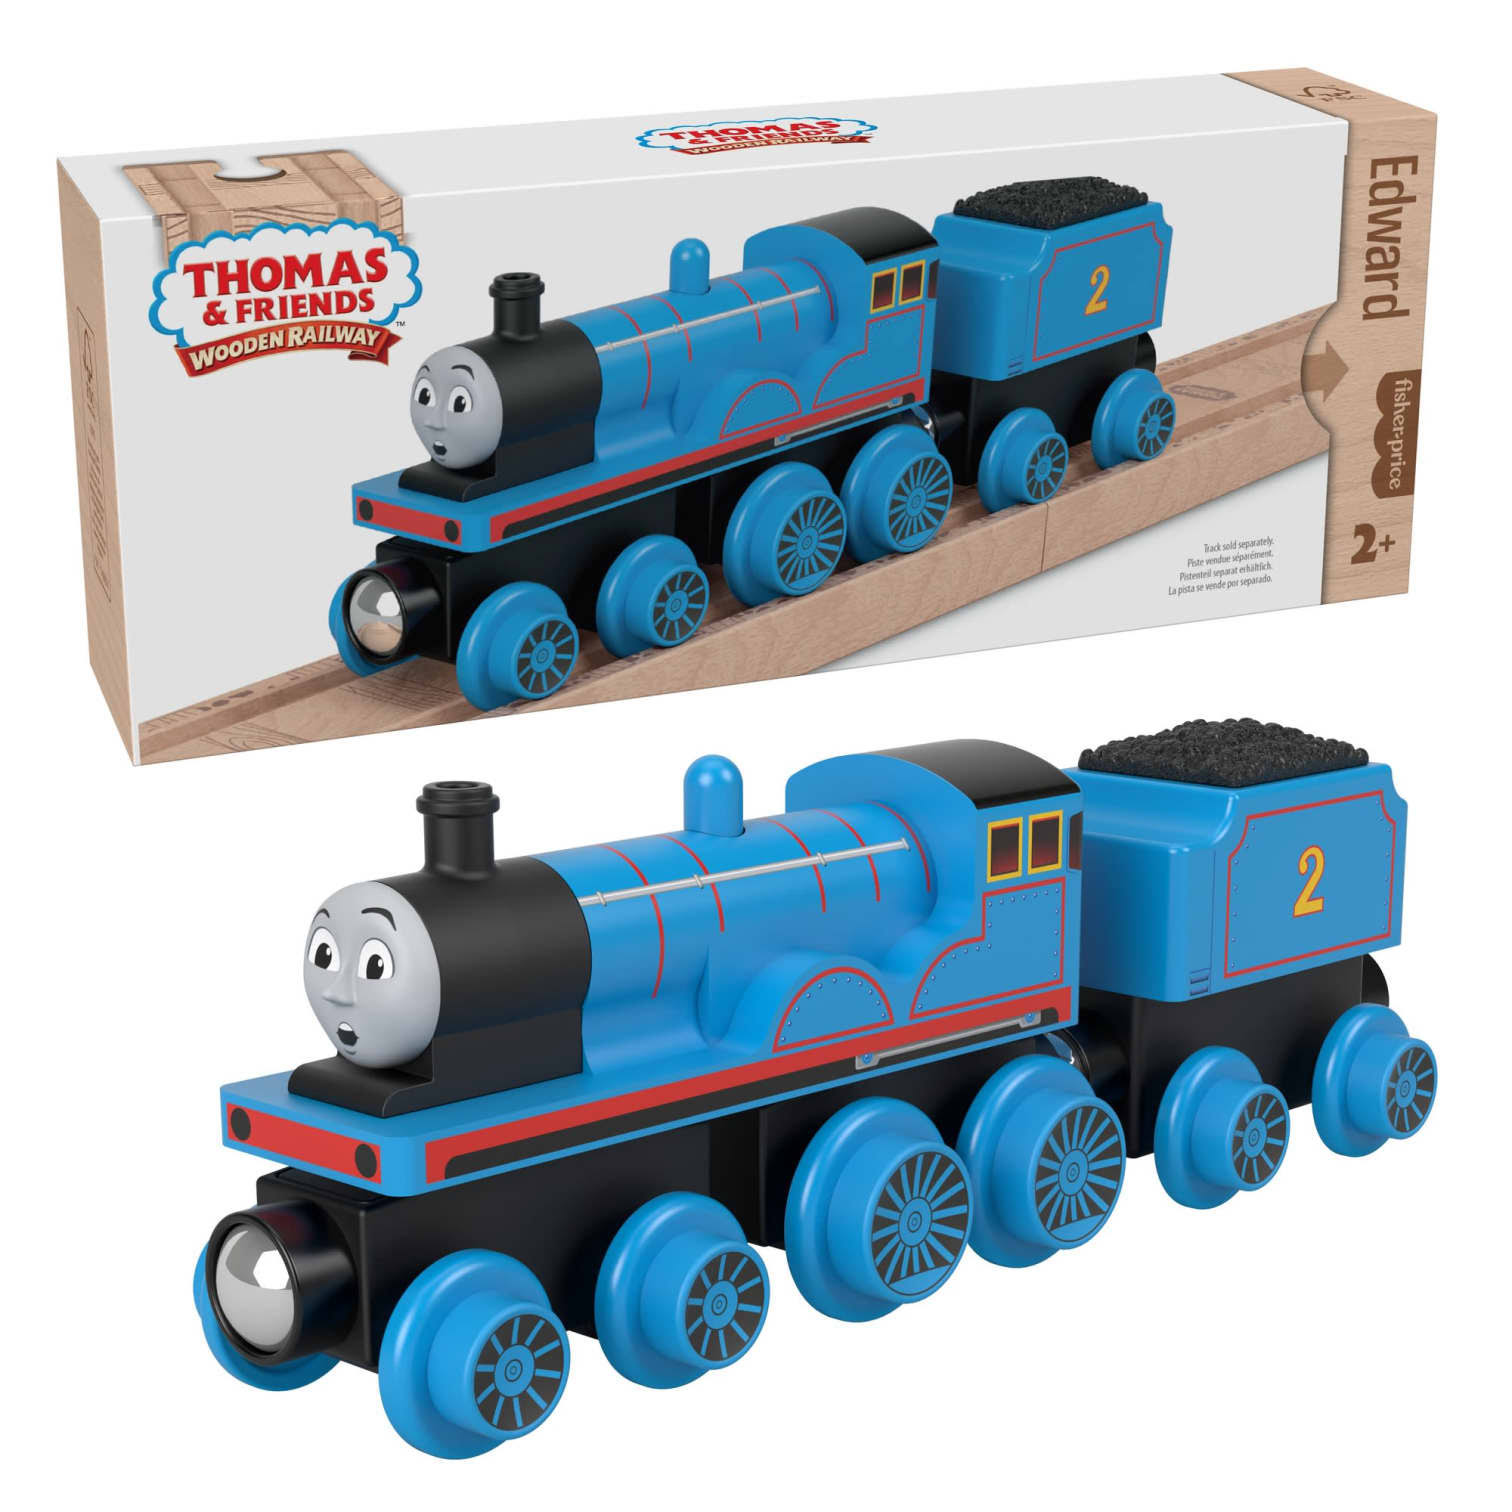 Thomas & Friends Wooden Railway - Edward Engine and Coal Car